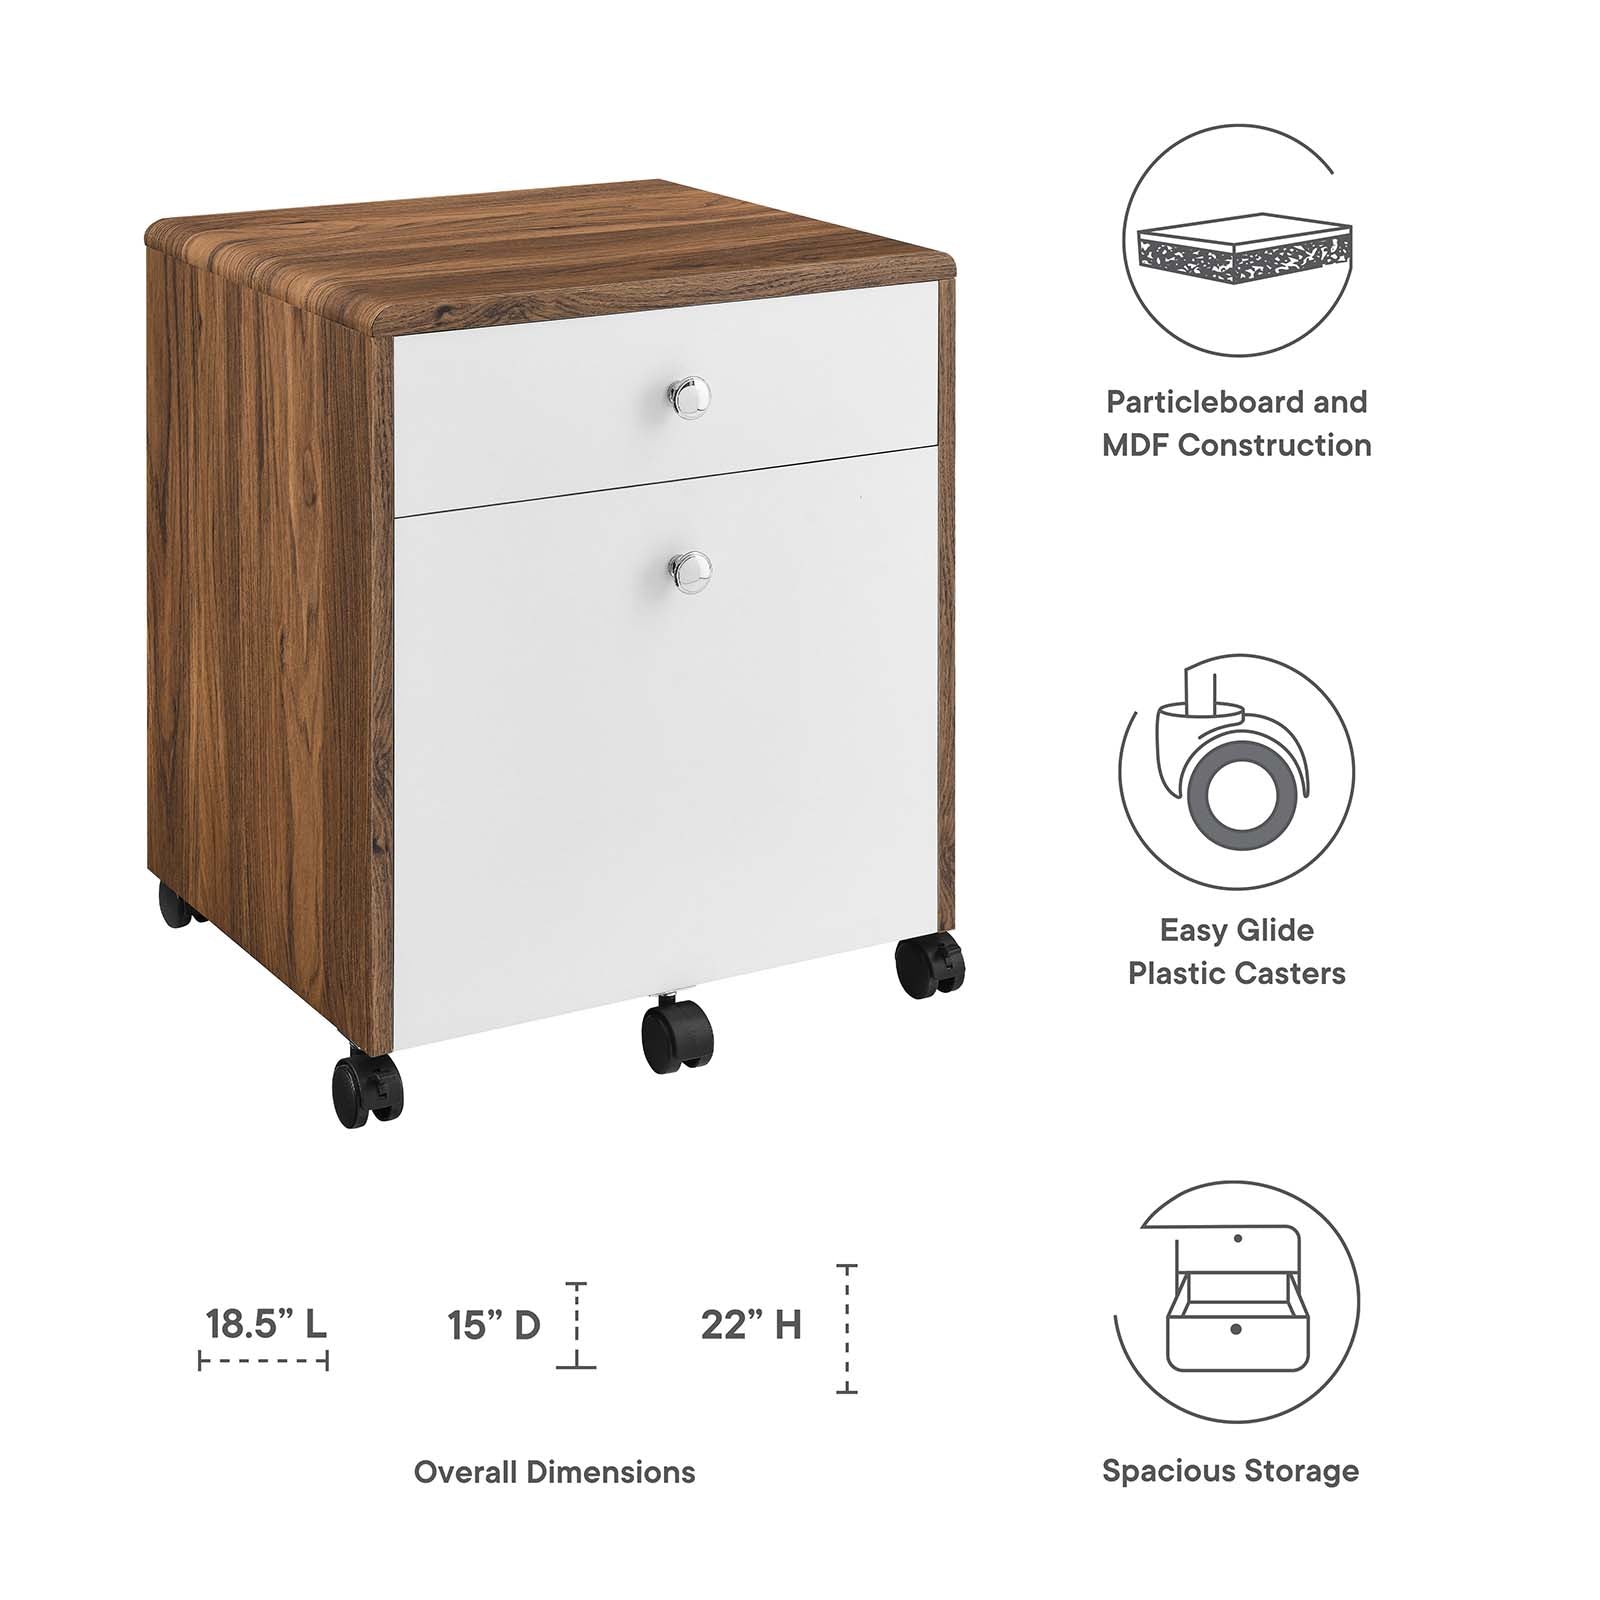 Modway File Cabinets - Render Wood File Cabinet Walnut White